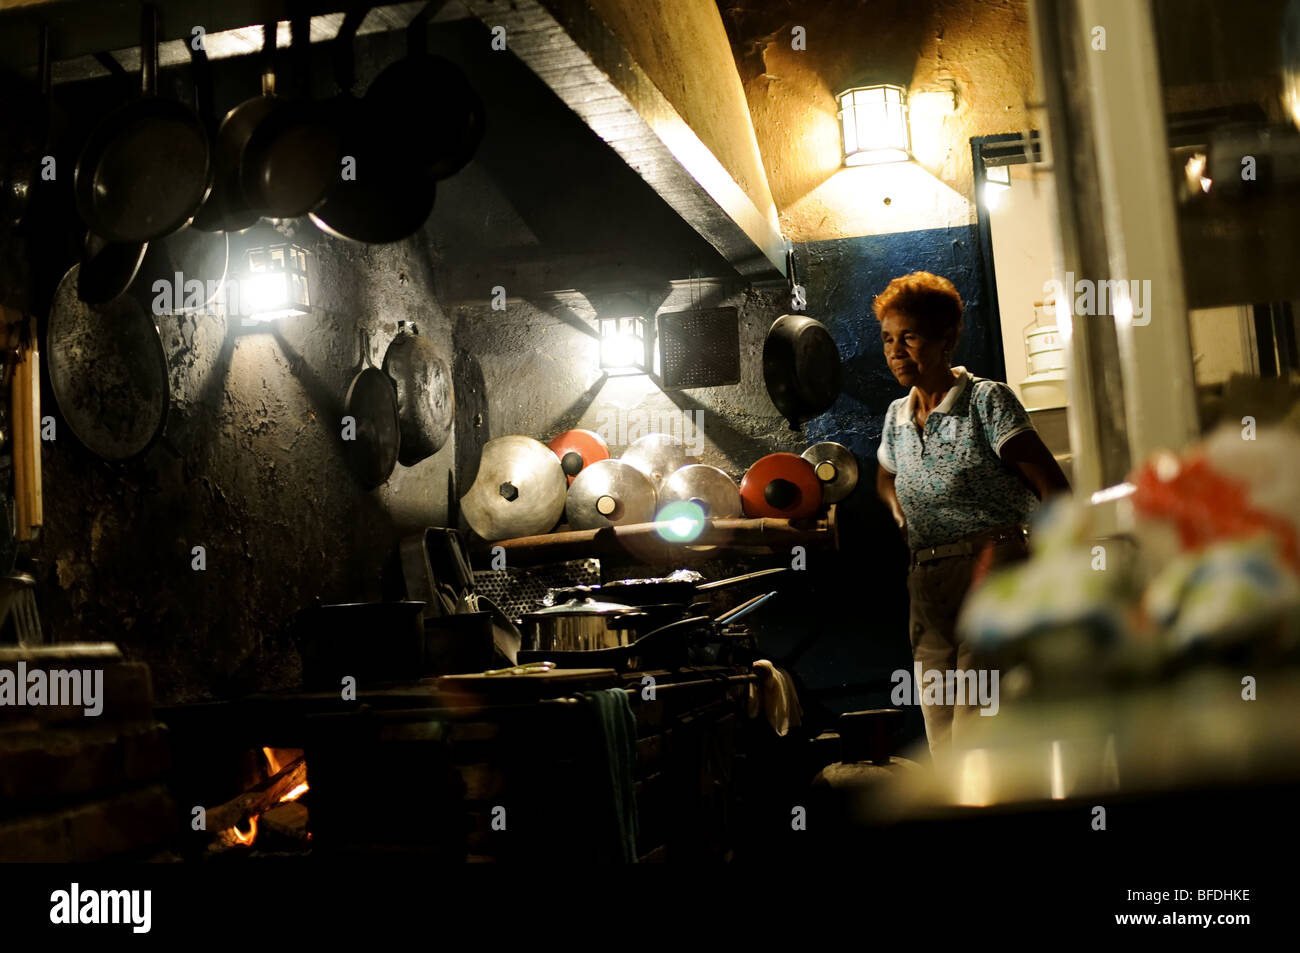 An elderly woman watches a wood-burning stove in a hacienda-style kitchen in Choroni, Venezuela. Stock Photo